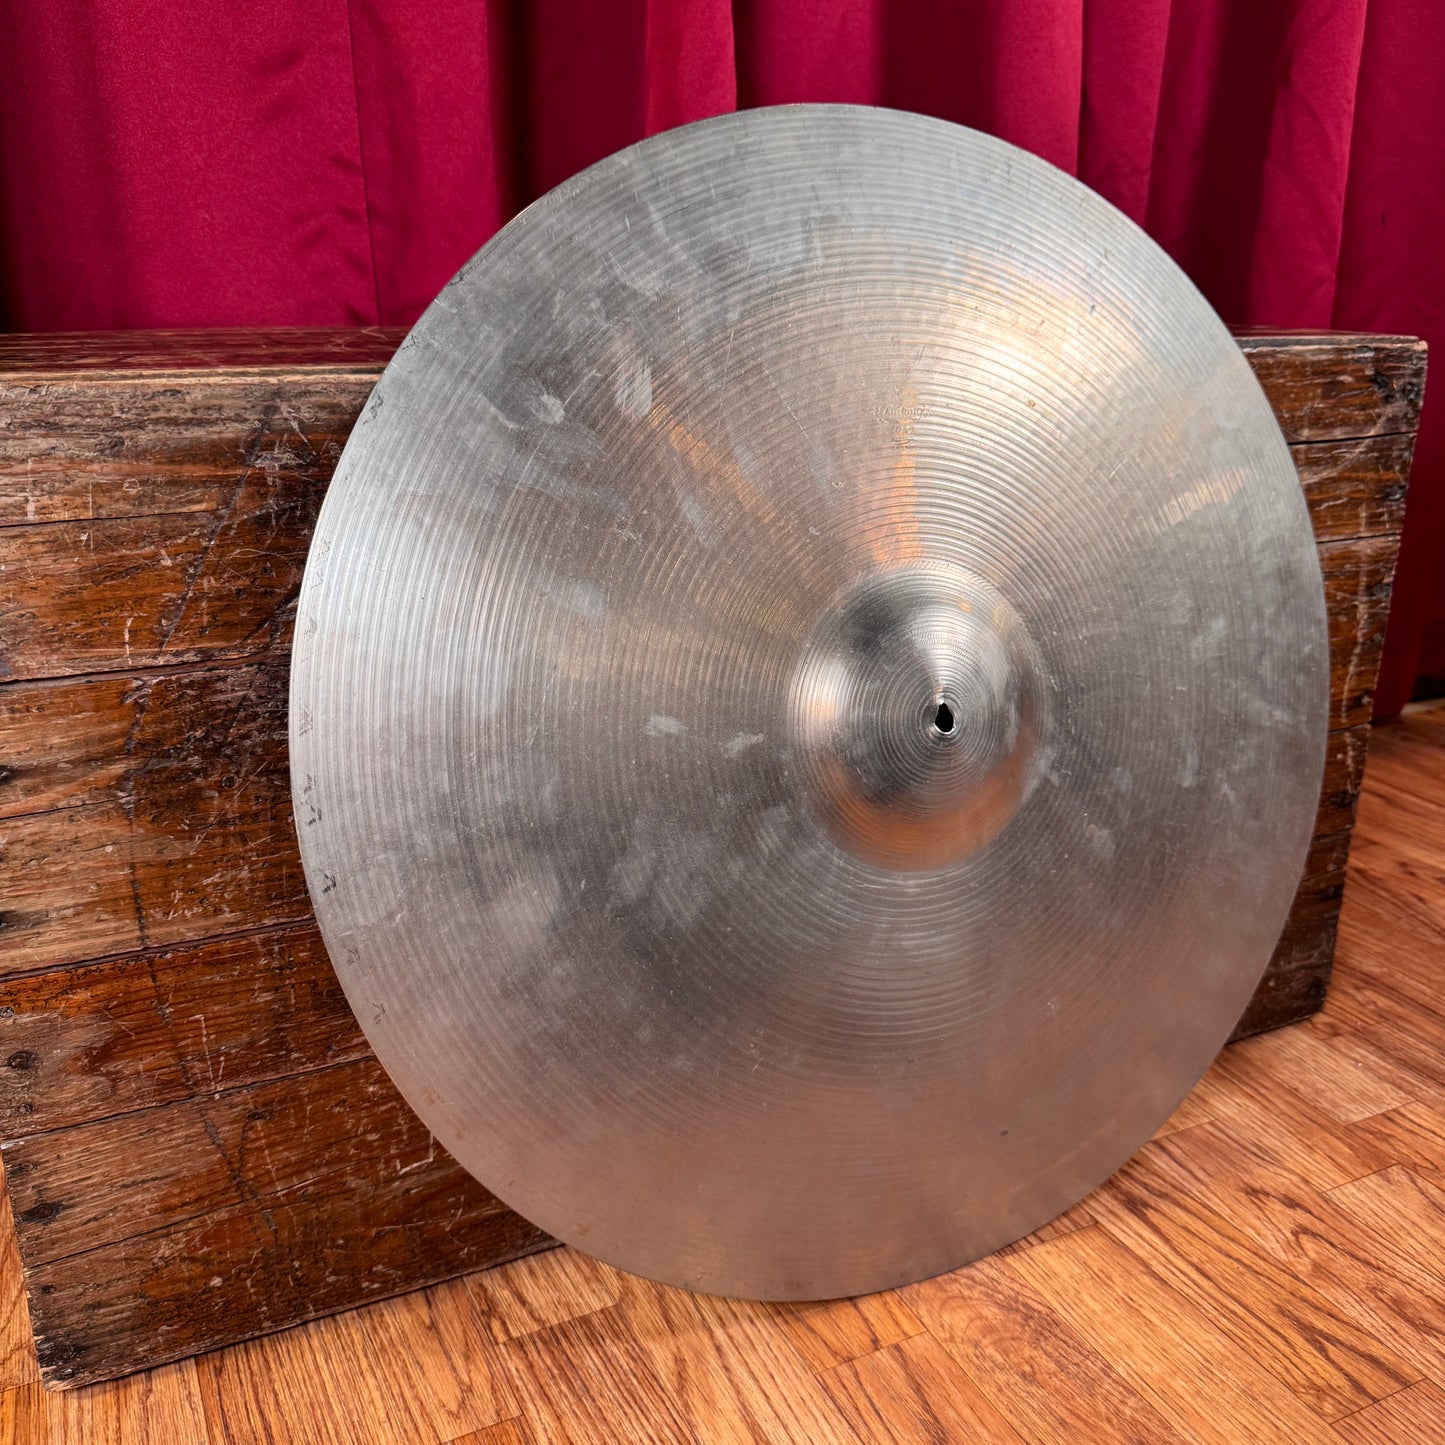 22" Paiste 1950s Ludwig Standard 3-Star Ride Cymbal 2210g Swiss